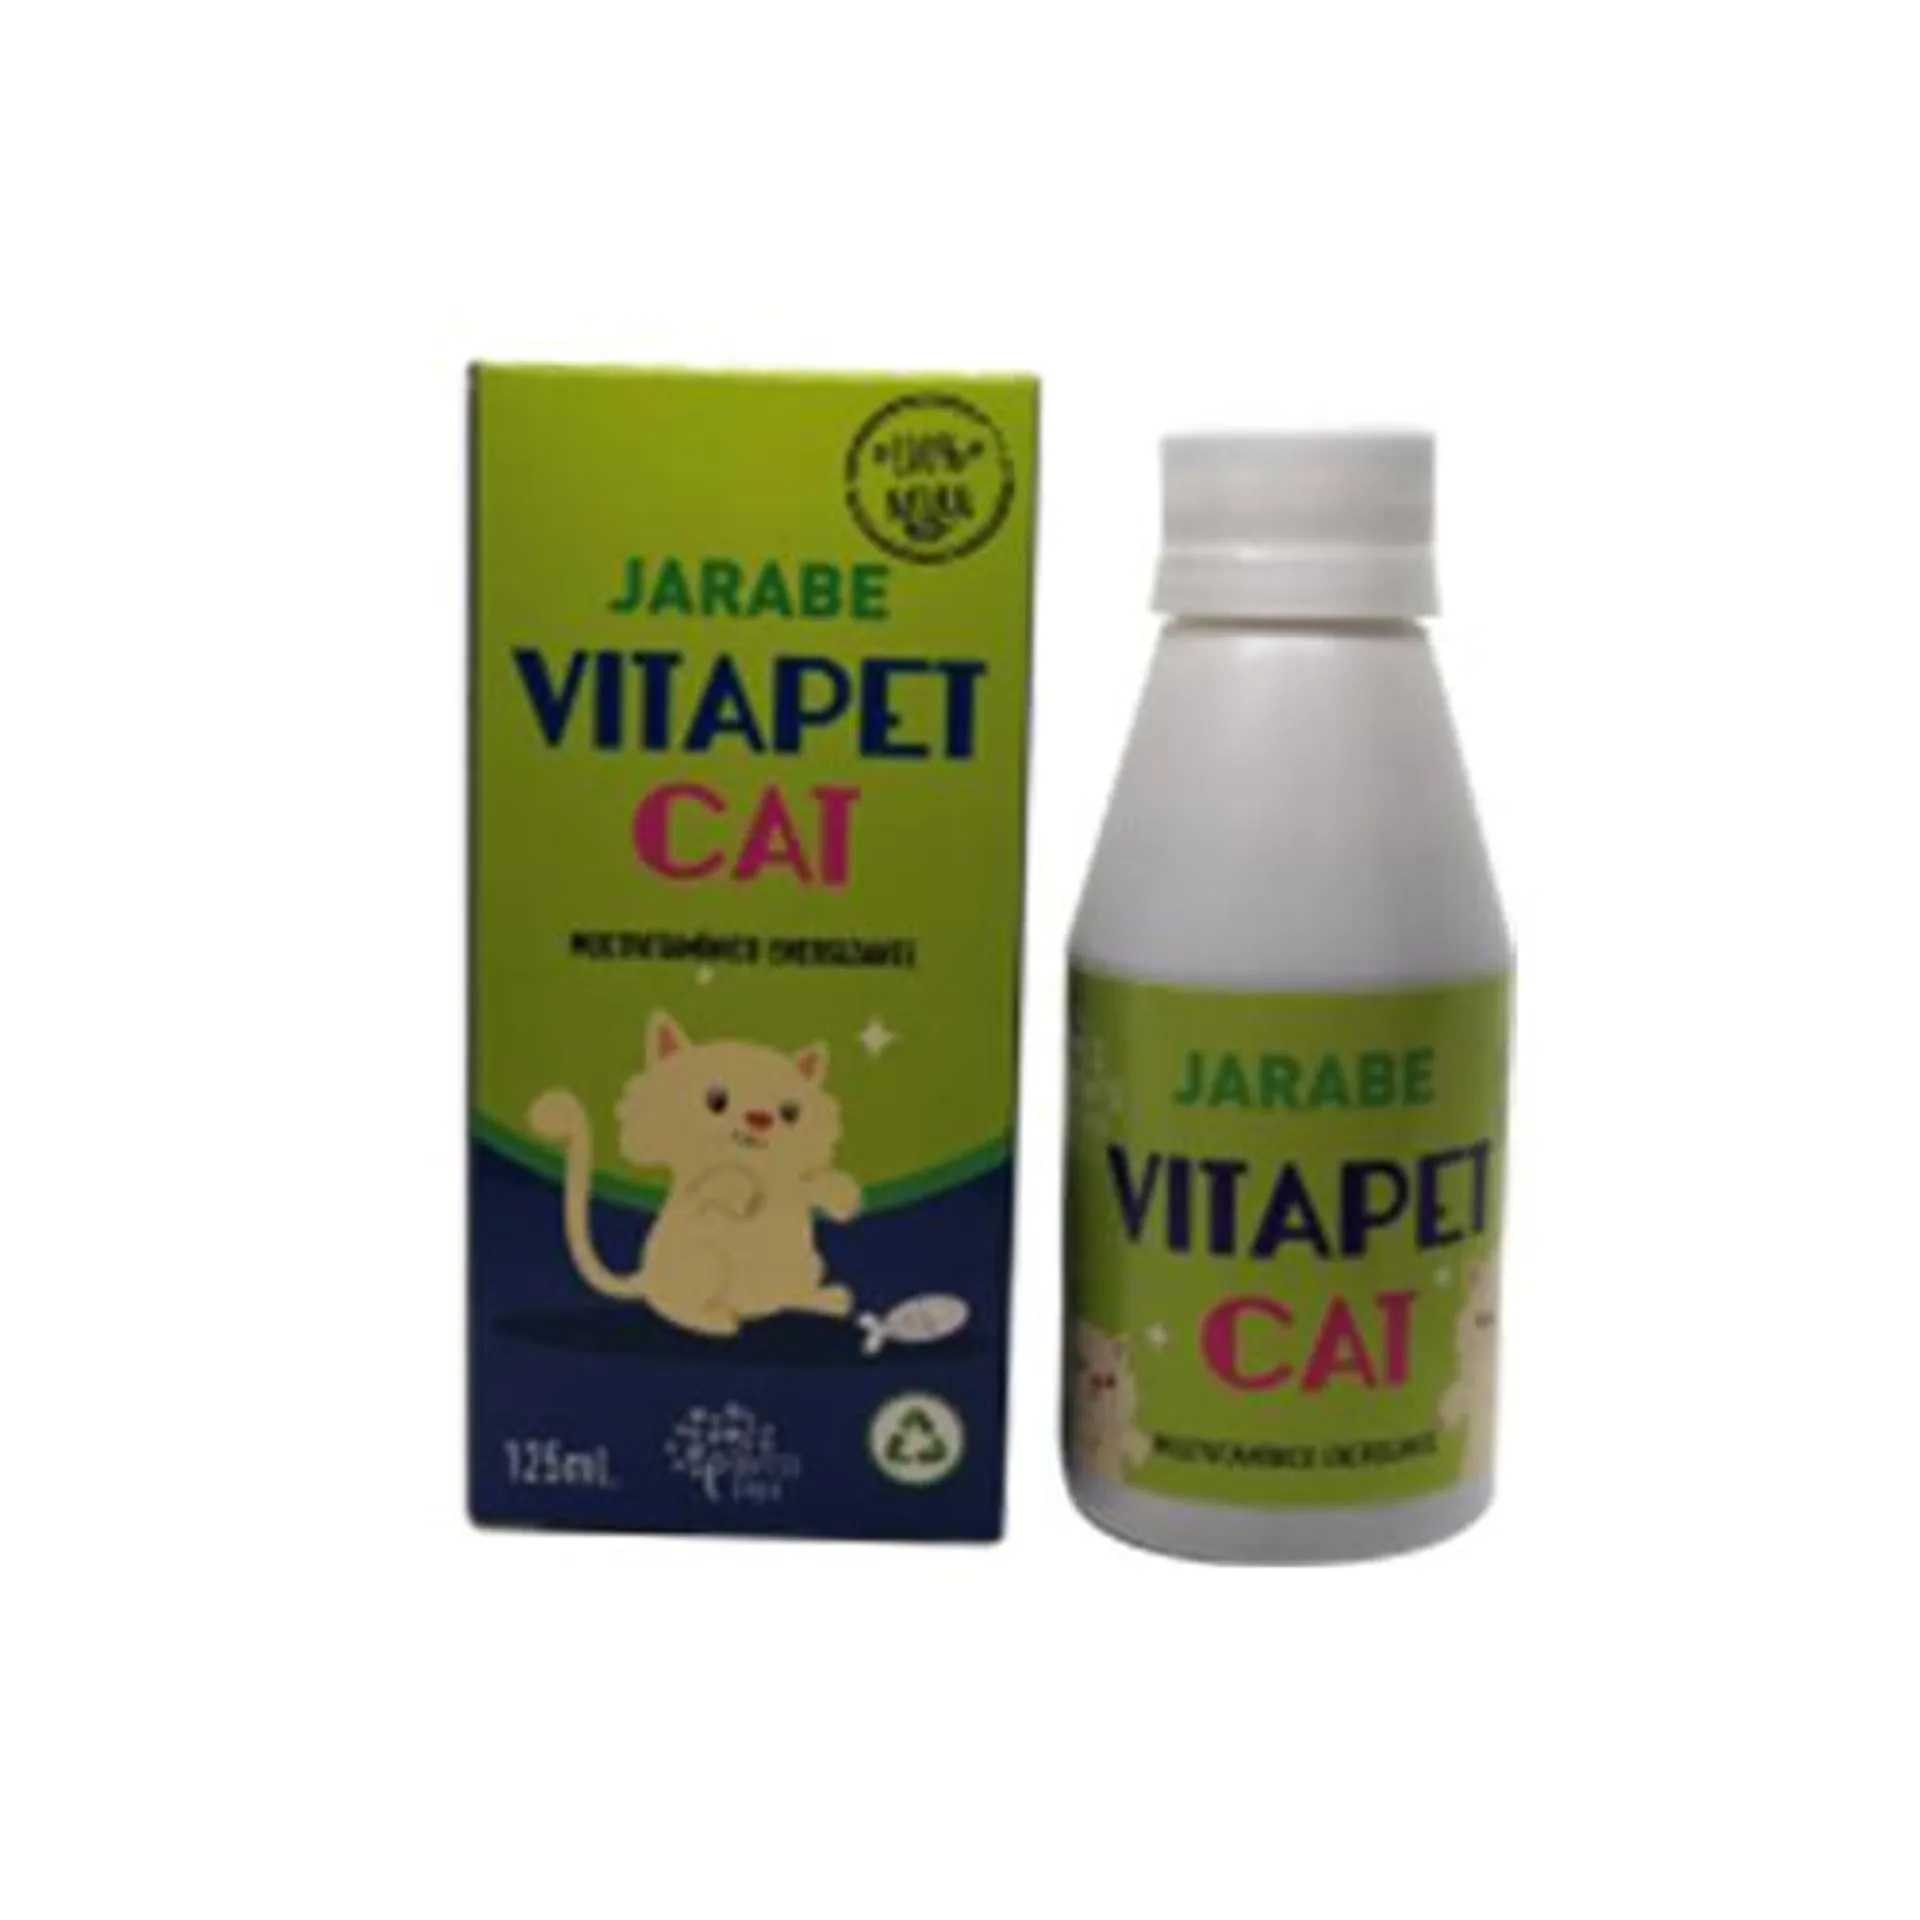 VITAPET CAT